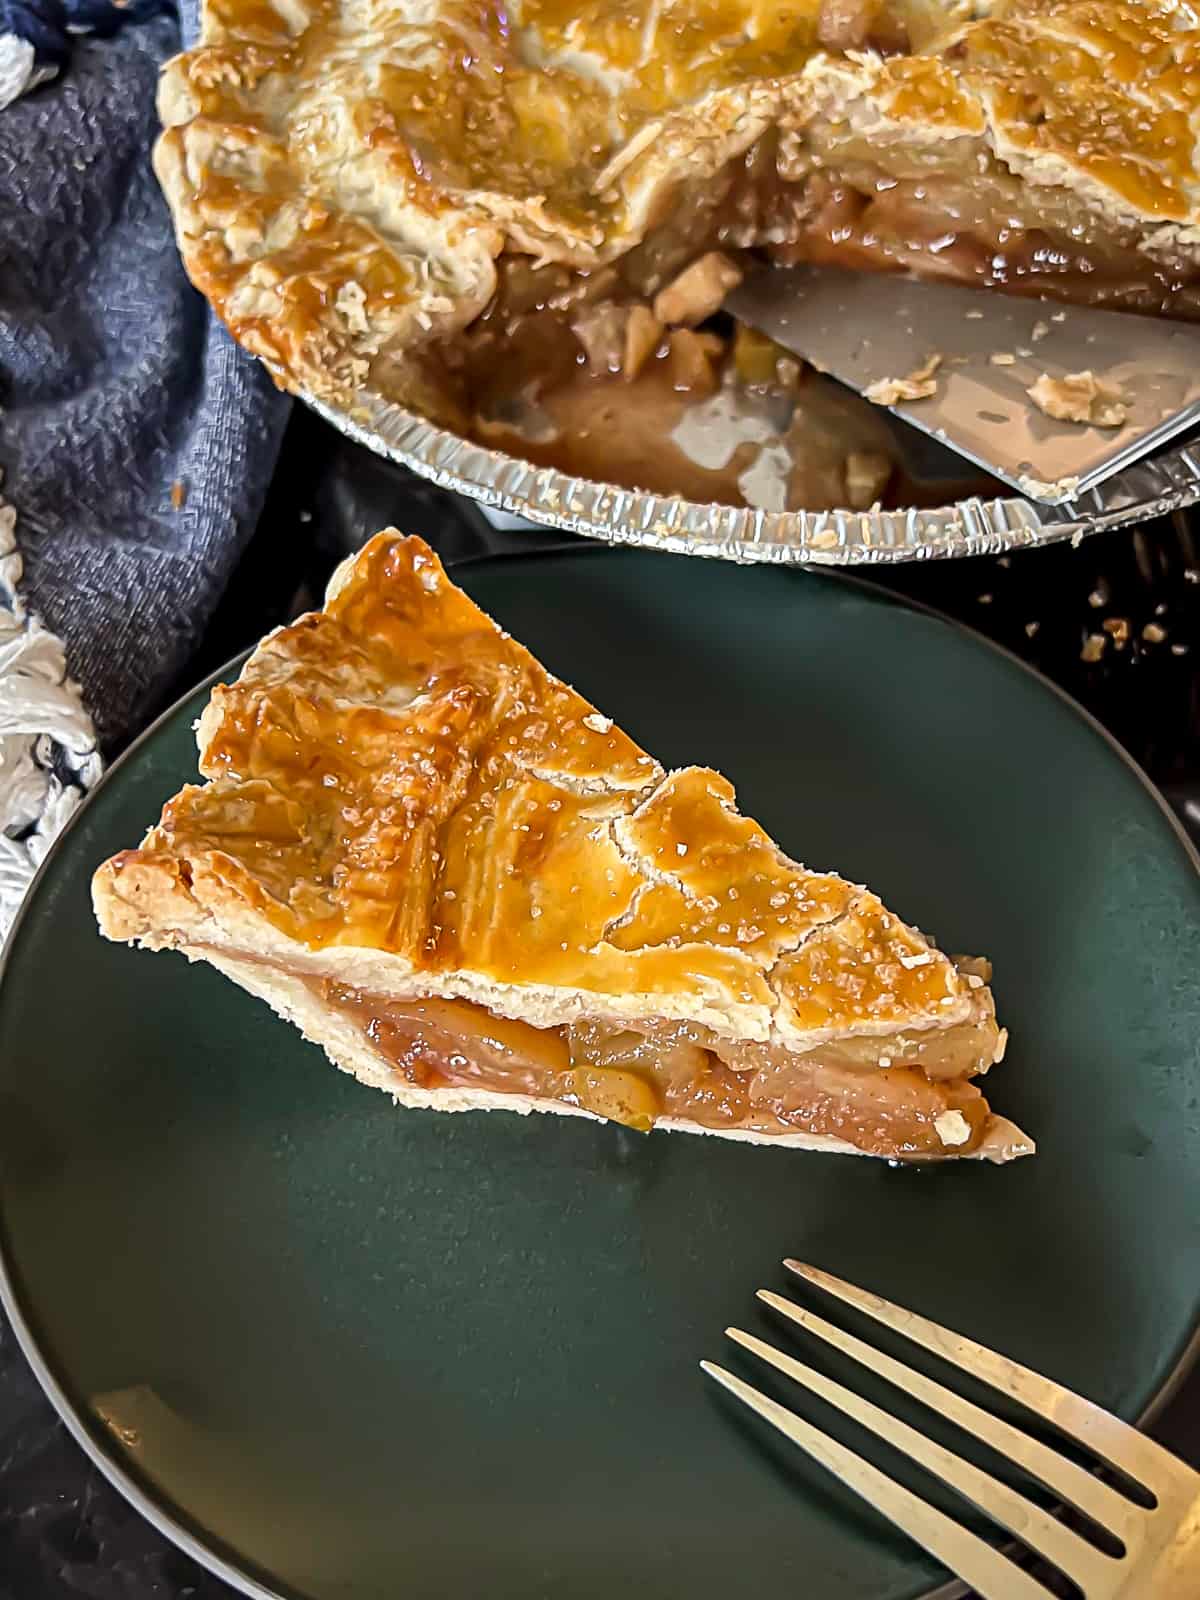 Traeger Smoked Apple Pie On Dessert Plate